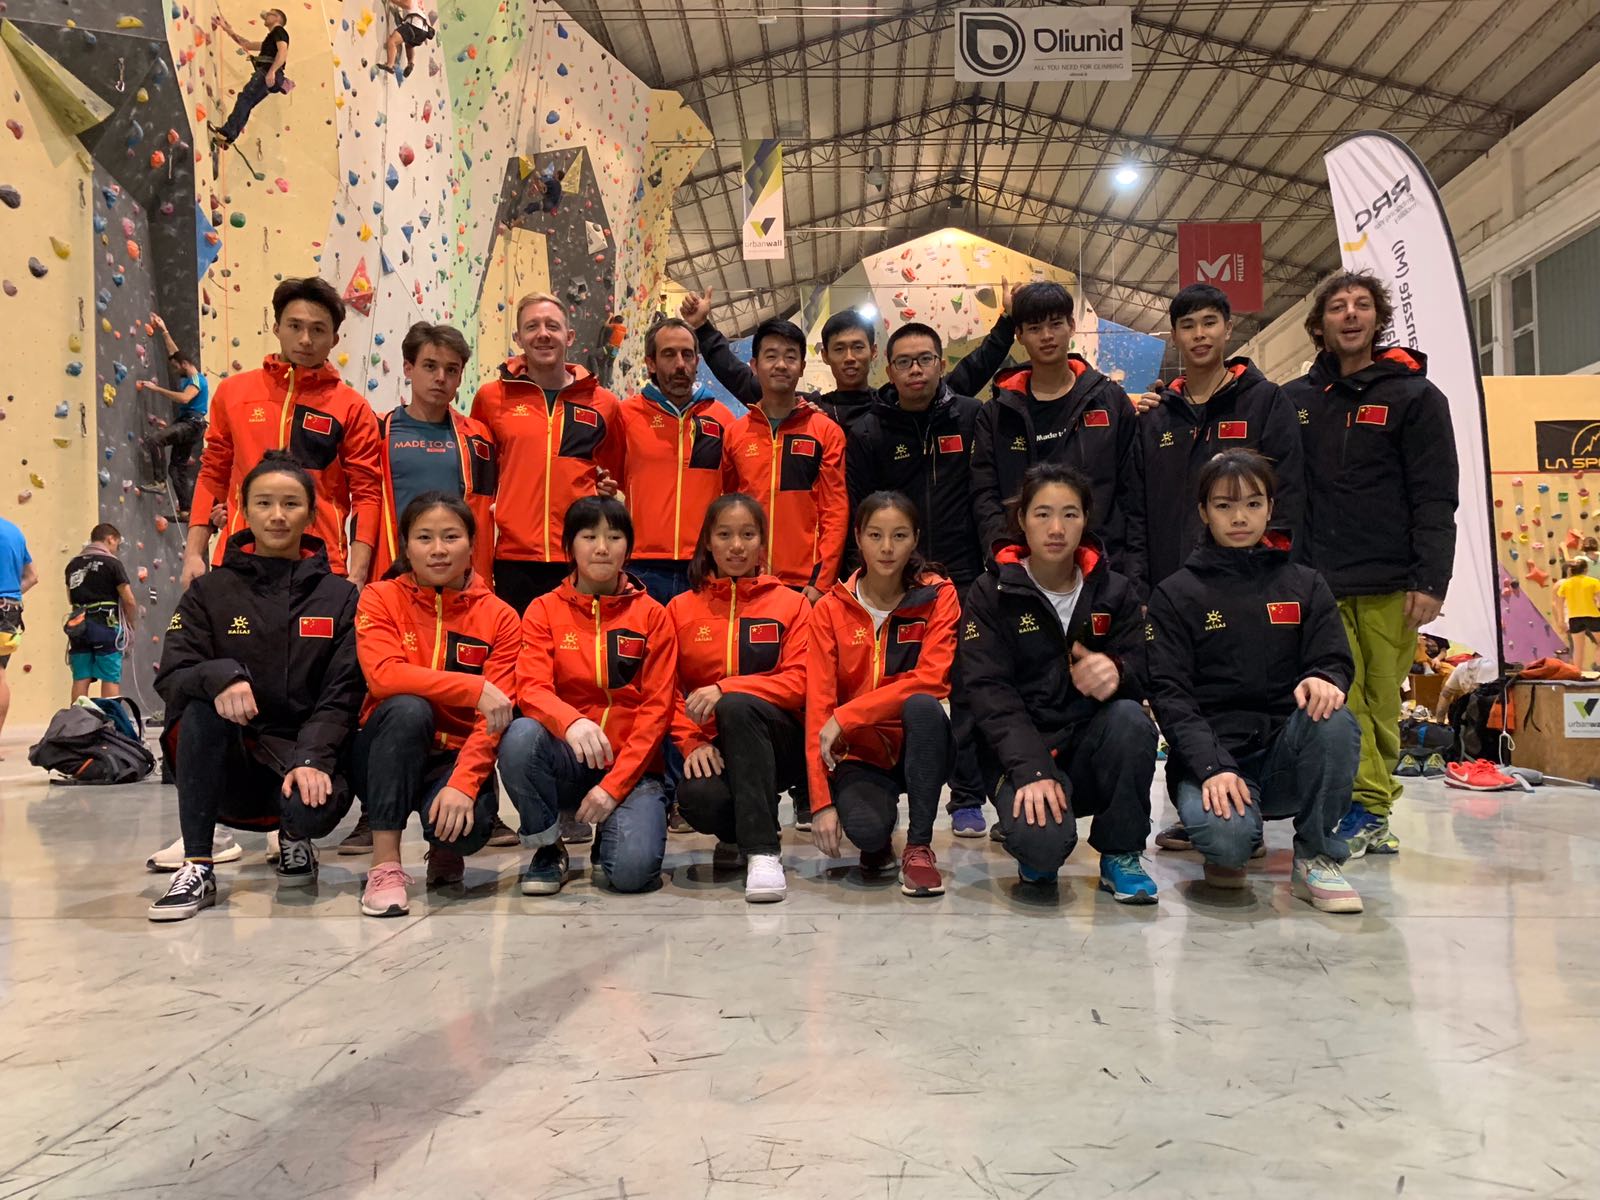 milano climbing expo 2019 Team Olimpico RPC